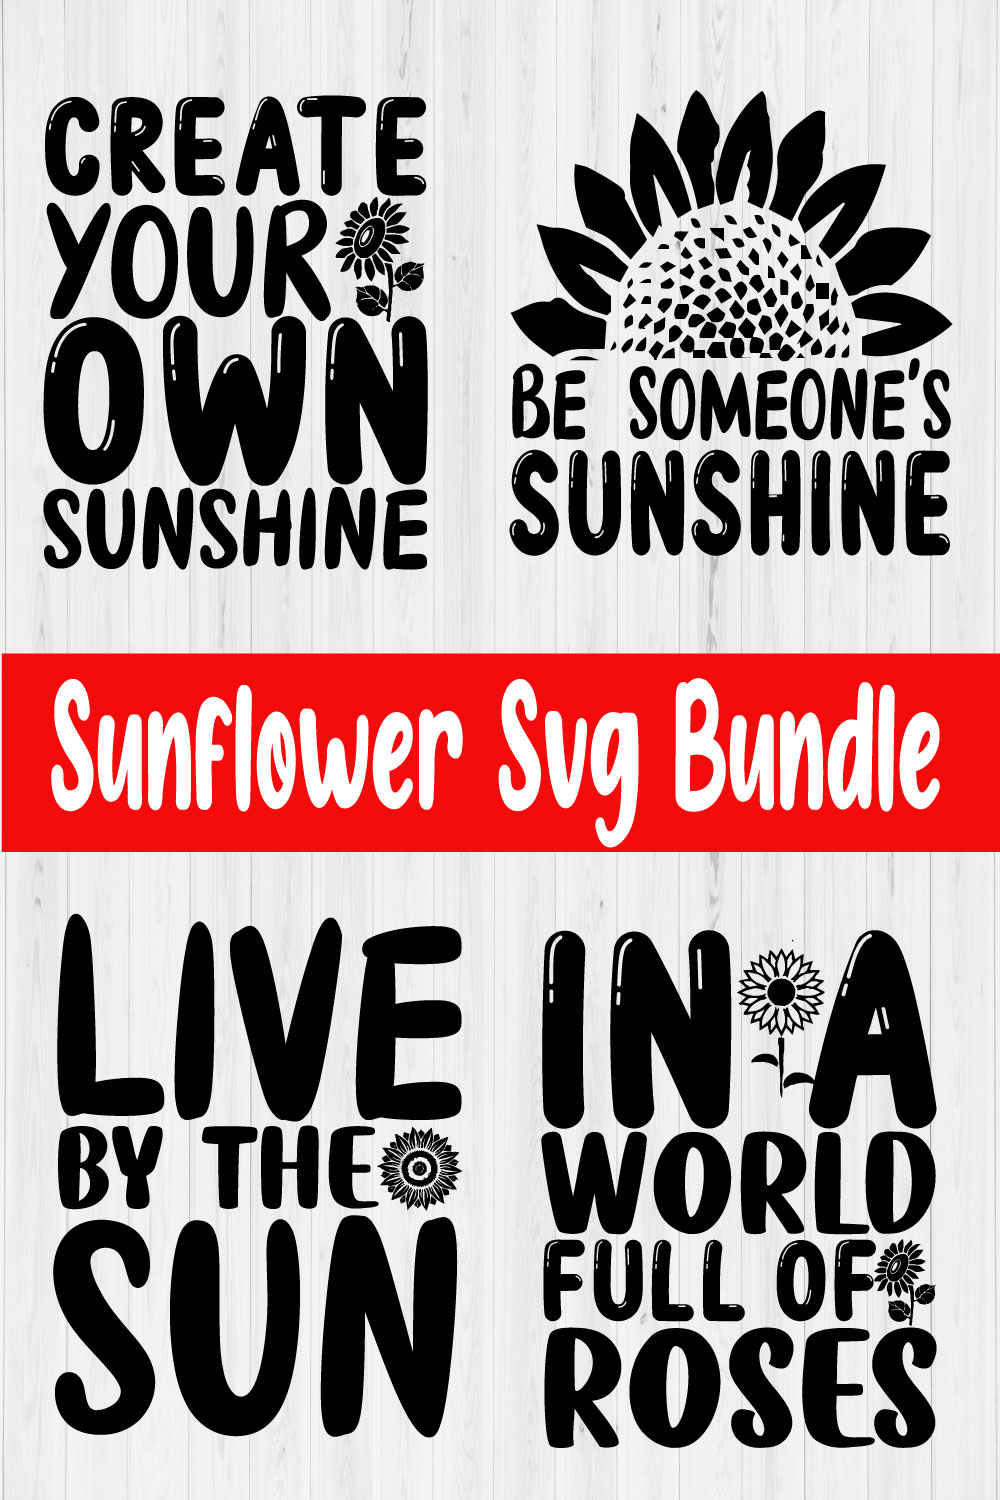 Sunflower Svg Bundle Vol1 pinterest preview image.